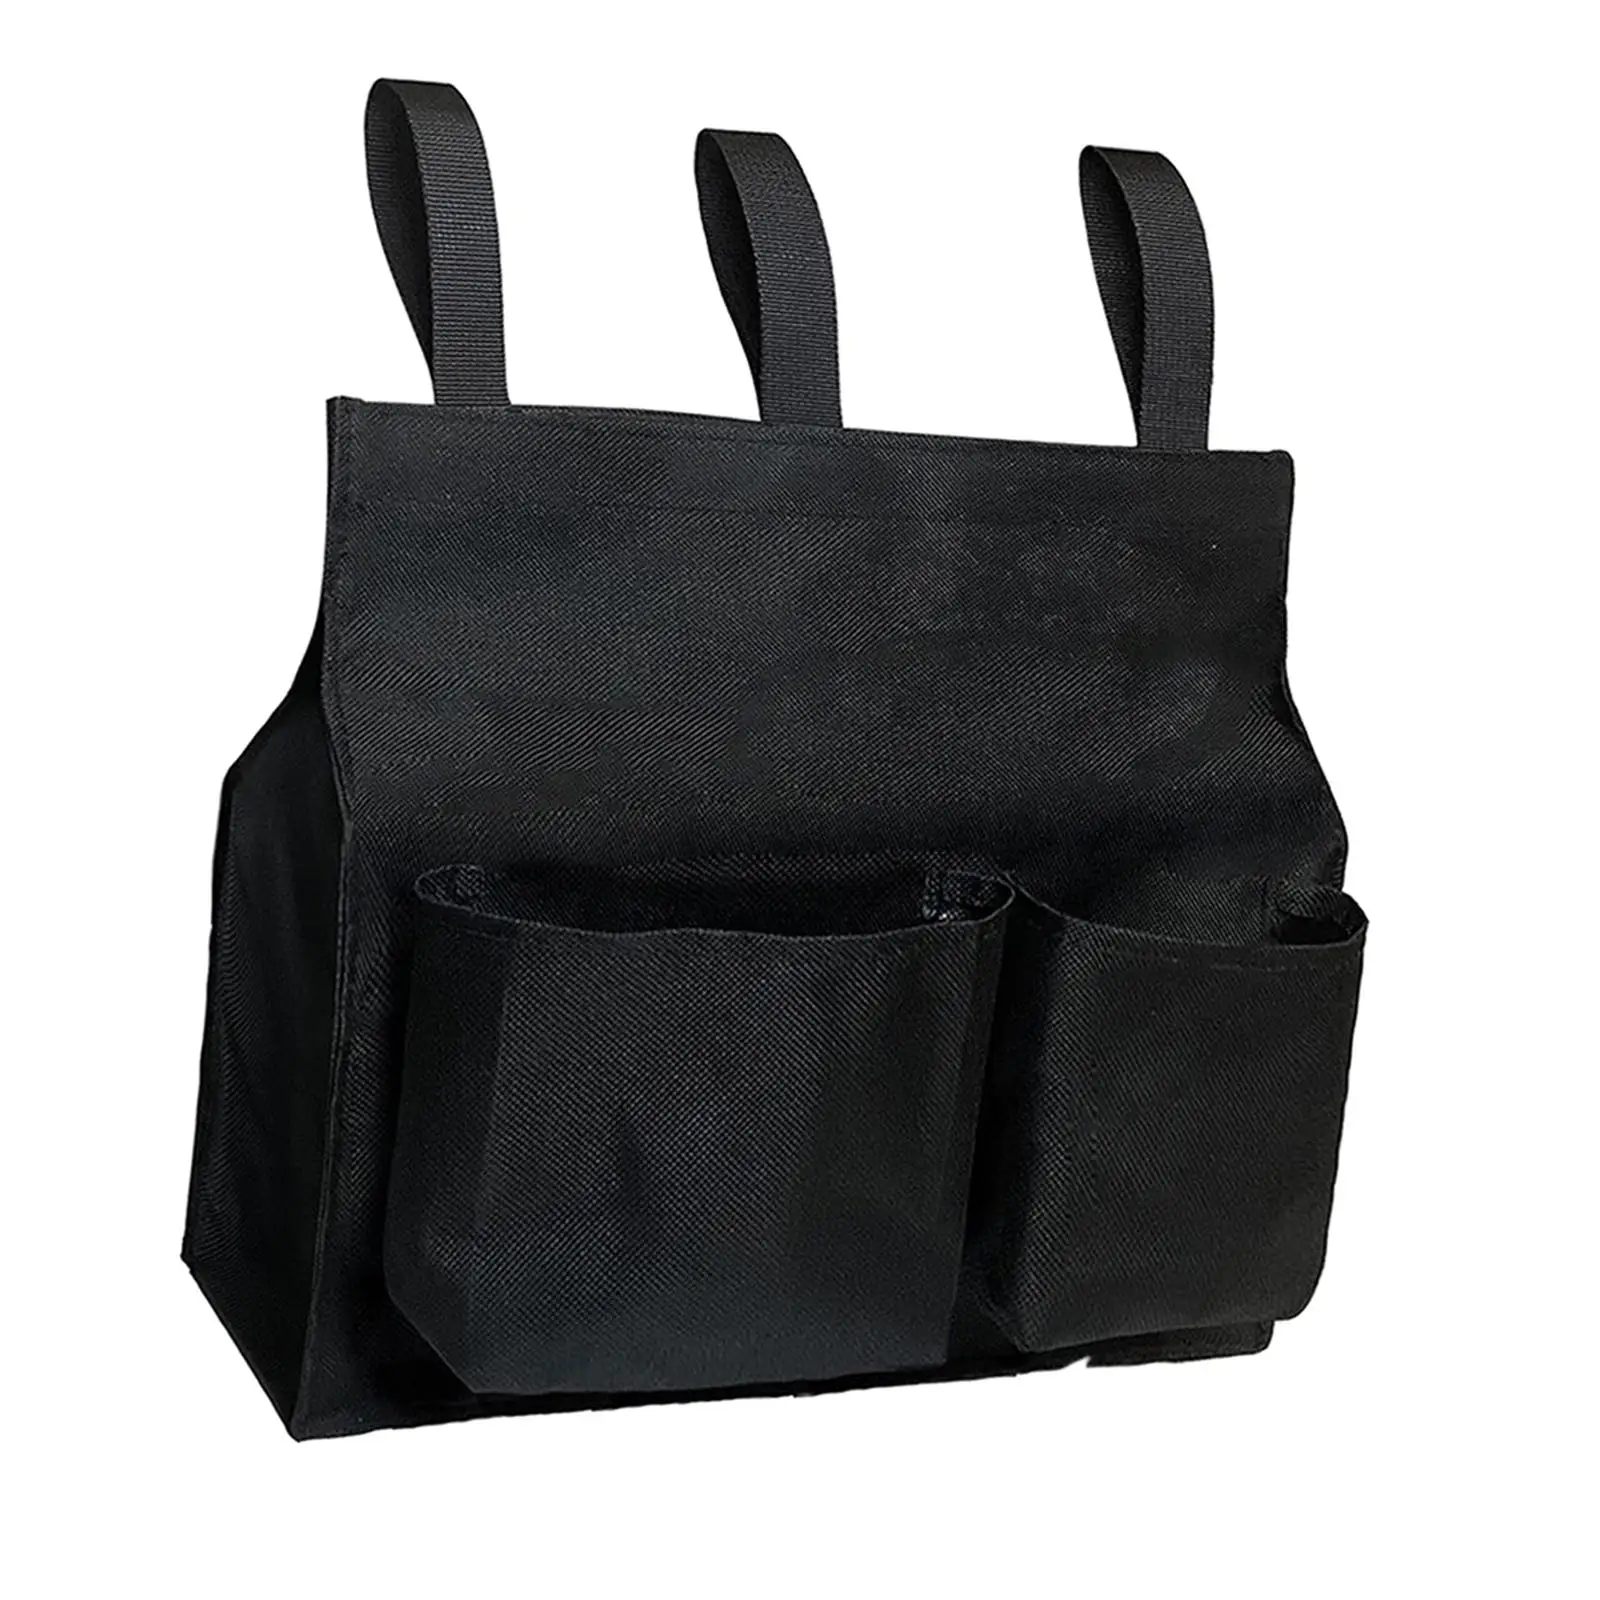 Softball Umpire Ball Bag Durable Quality Extra Large Black Oxford Fabric Referee